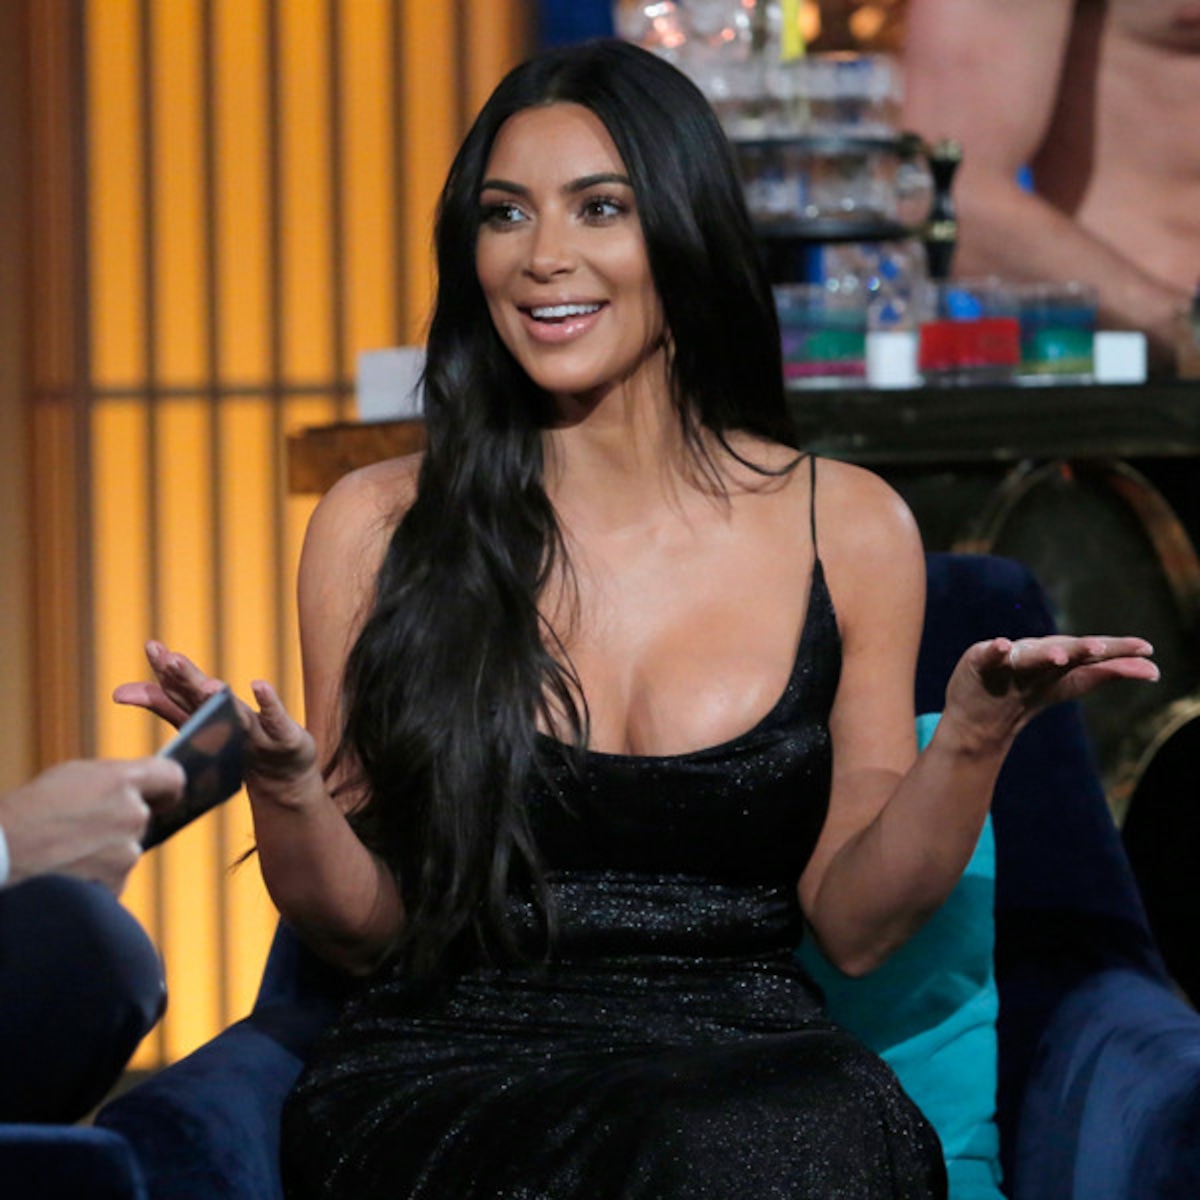 Kim Kardashian Calls Plans for Baby No. 4 "Fake News"